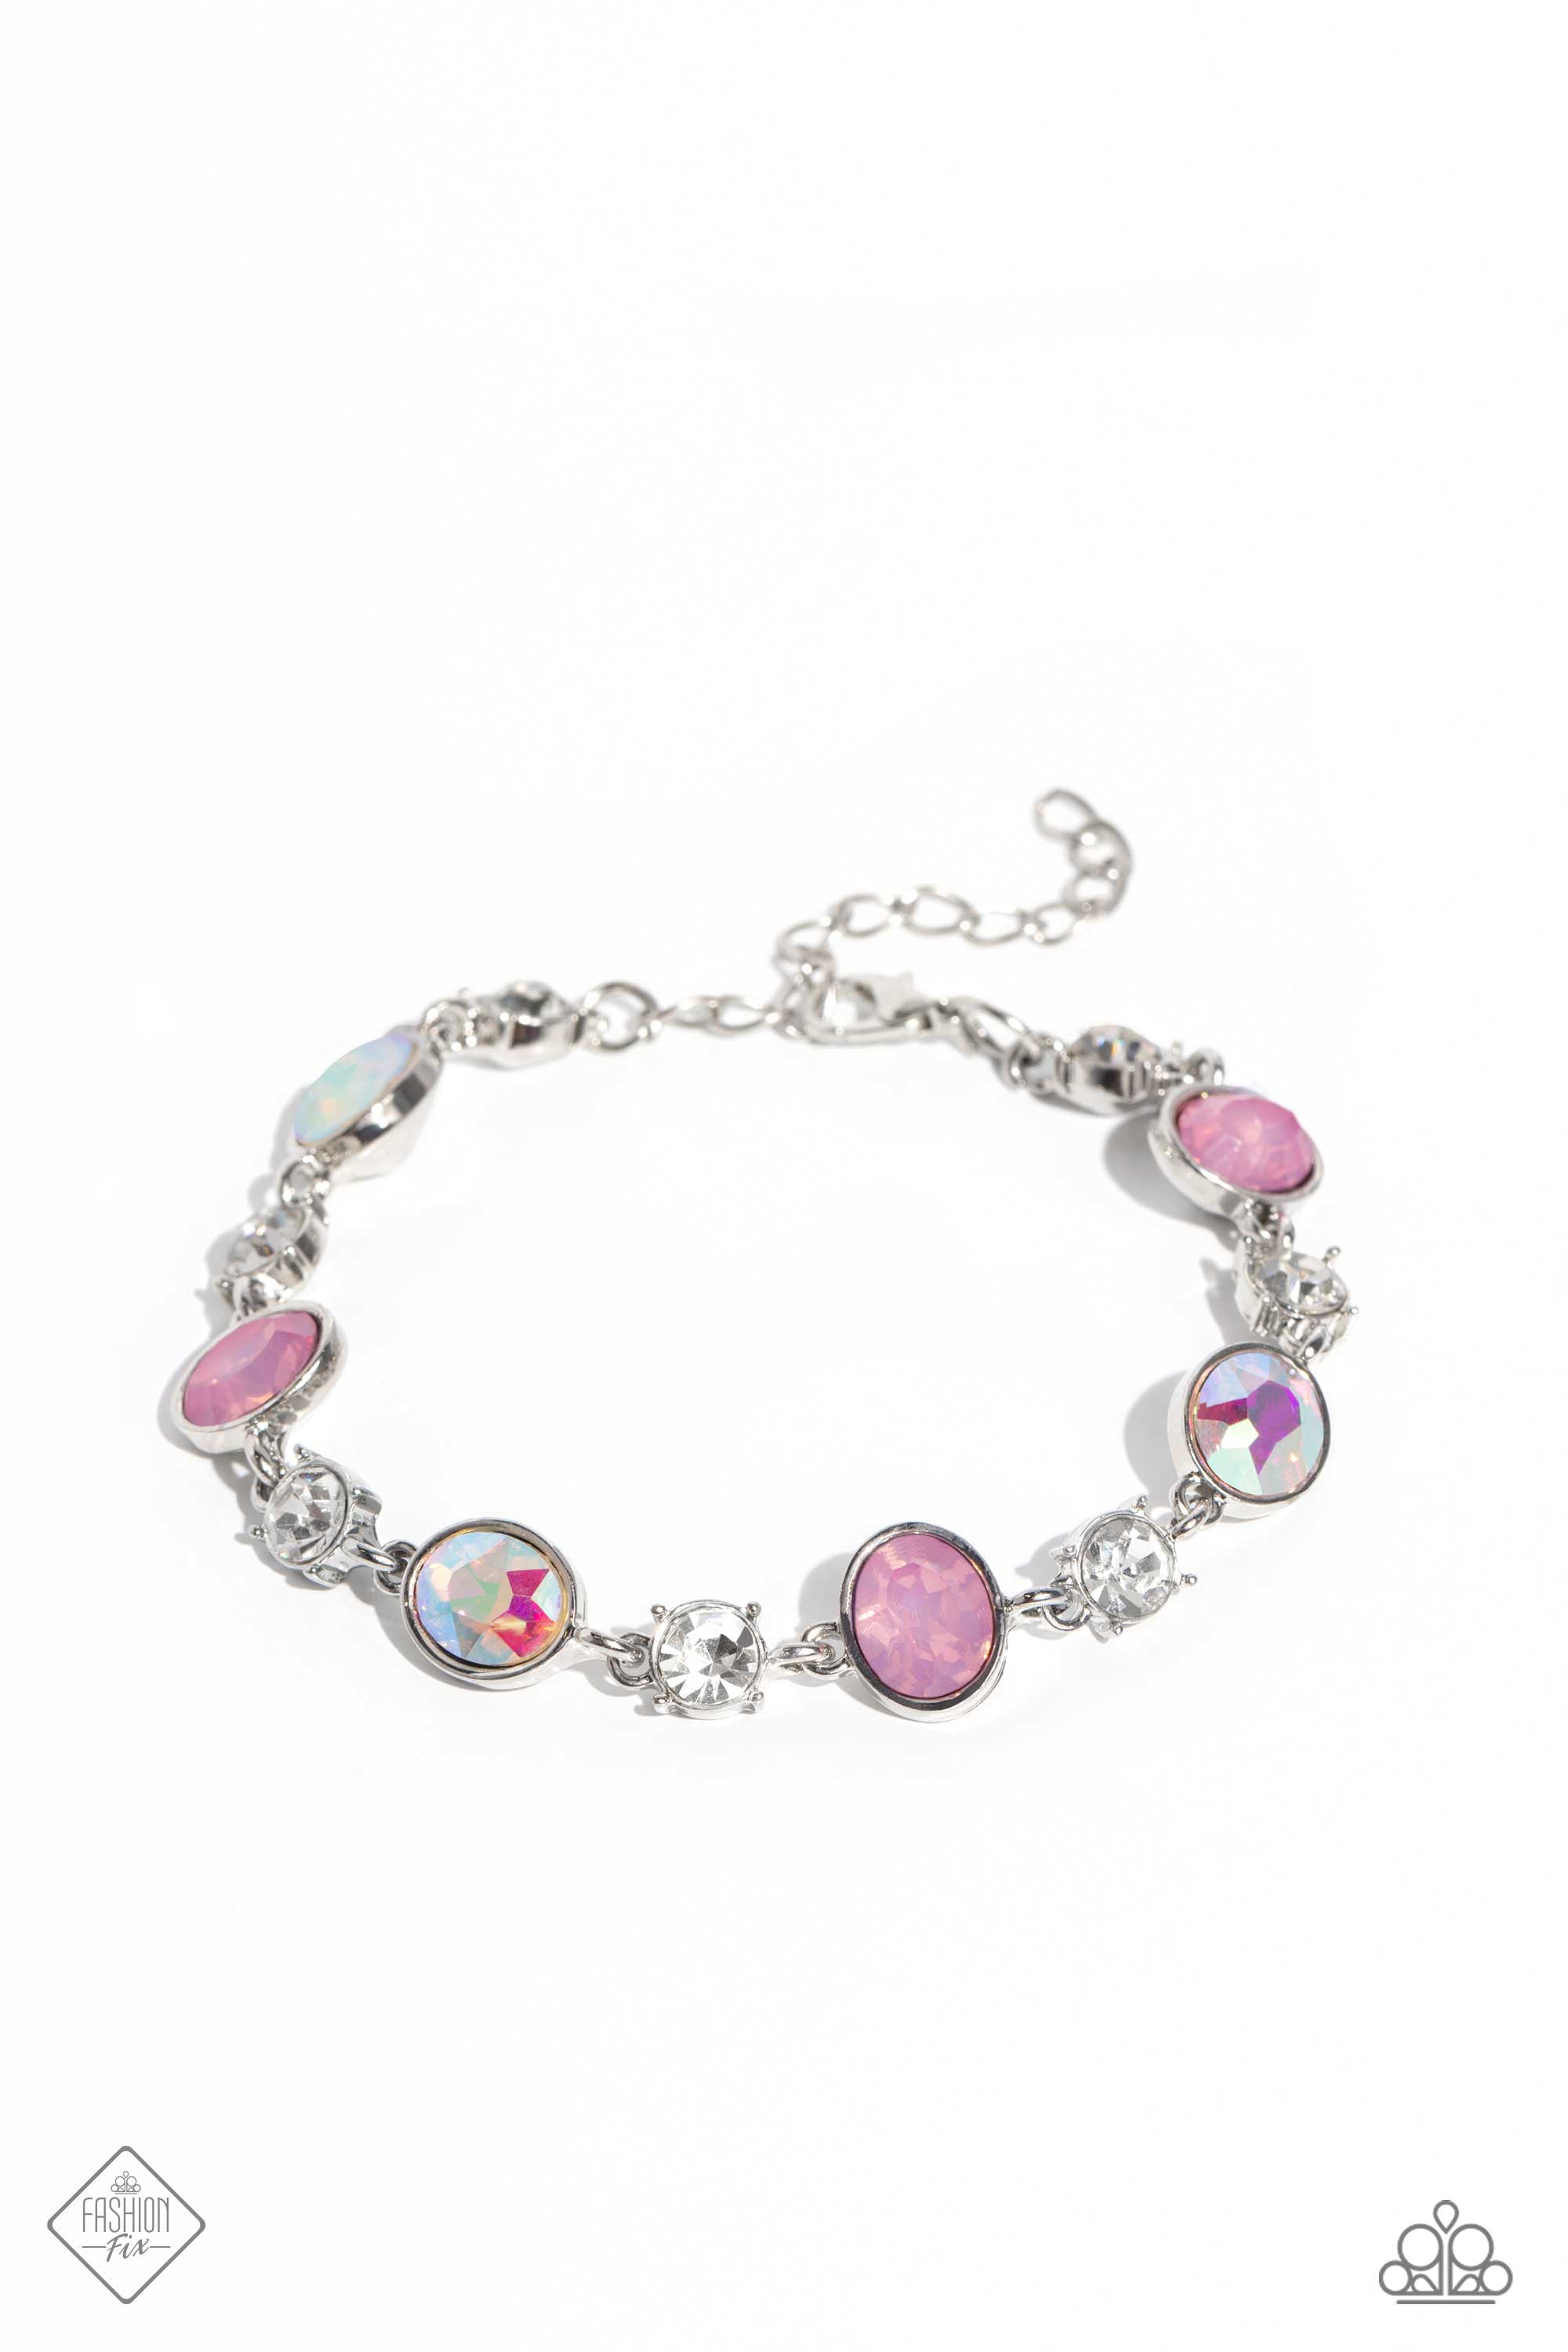 Ethereal Empathy Multi & Pink Rhinestone Bracelet - Paparazzi Accessories- lightbox - CarasShop.com - $5 Jewelry by Cara Jewels